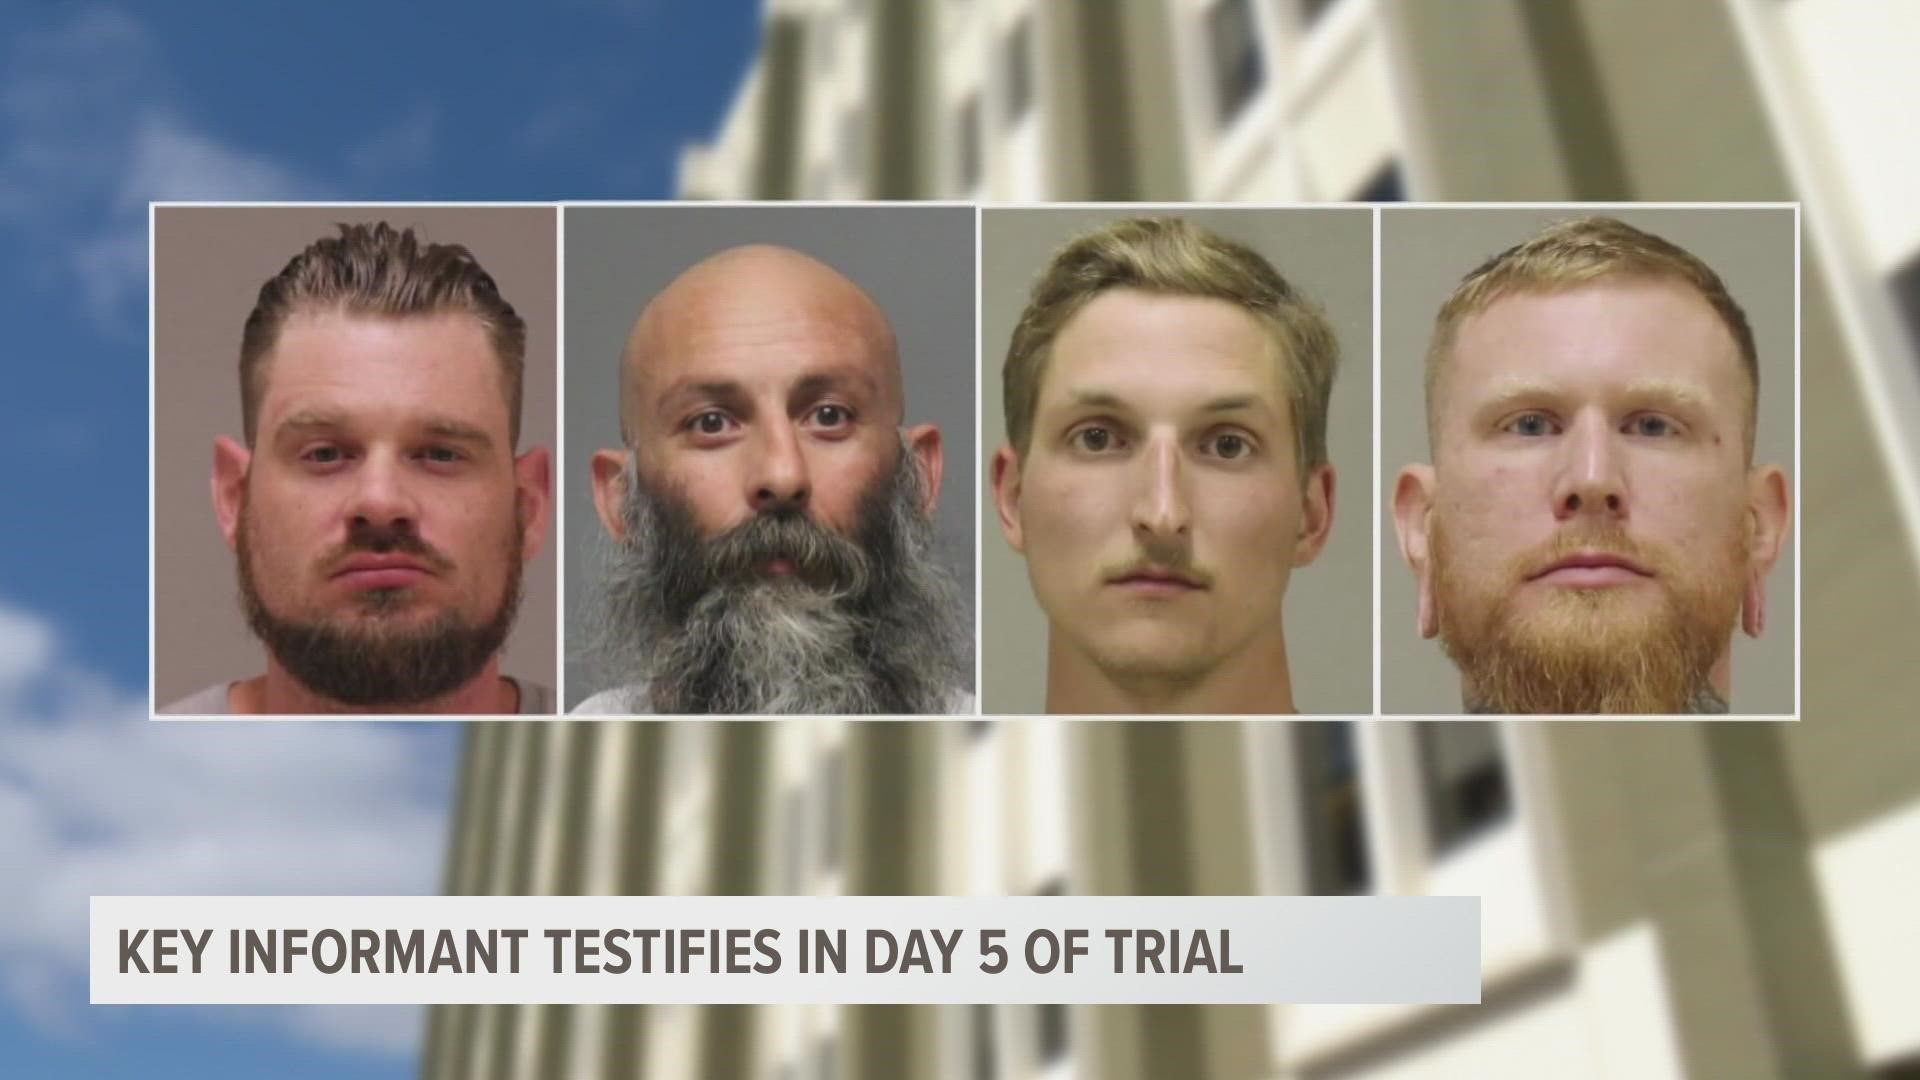 The trial for Adam Fox, Barry Croft Jr., Daniel Harris and Brandon Caserta continues.